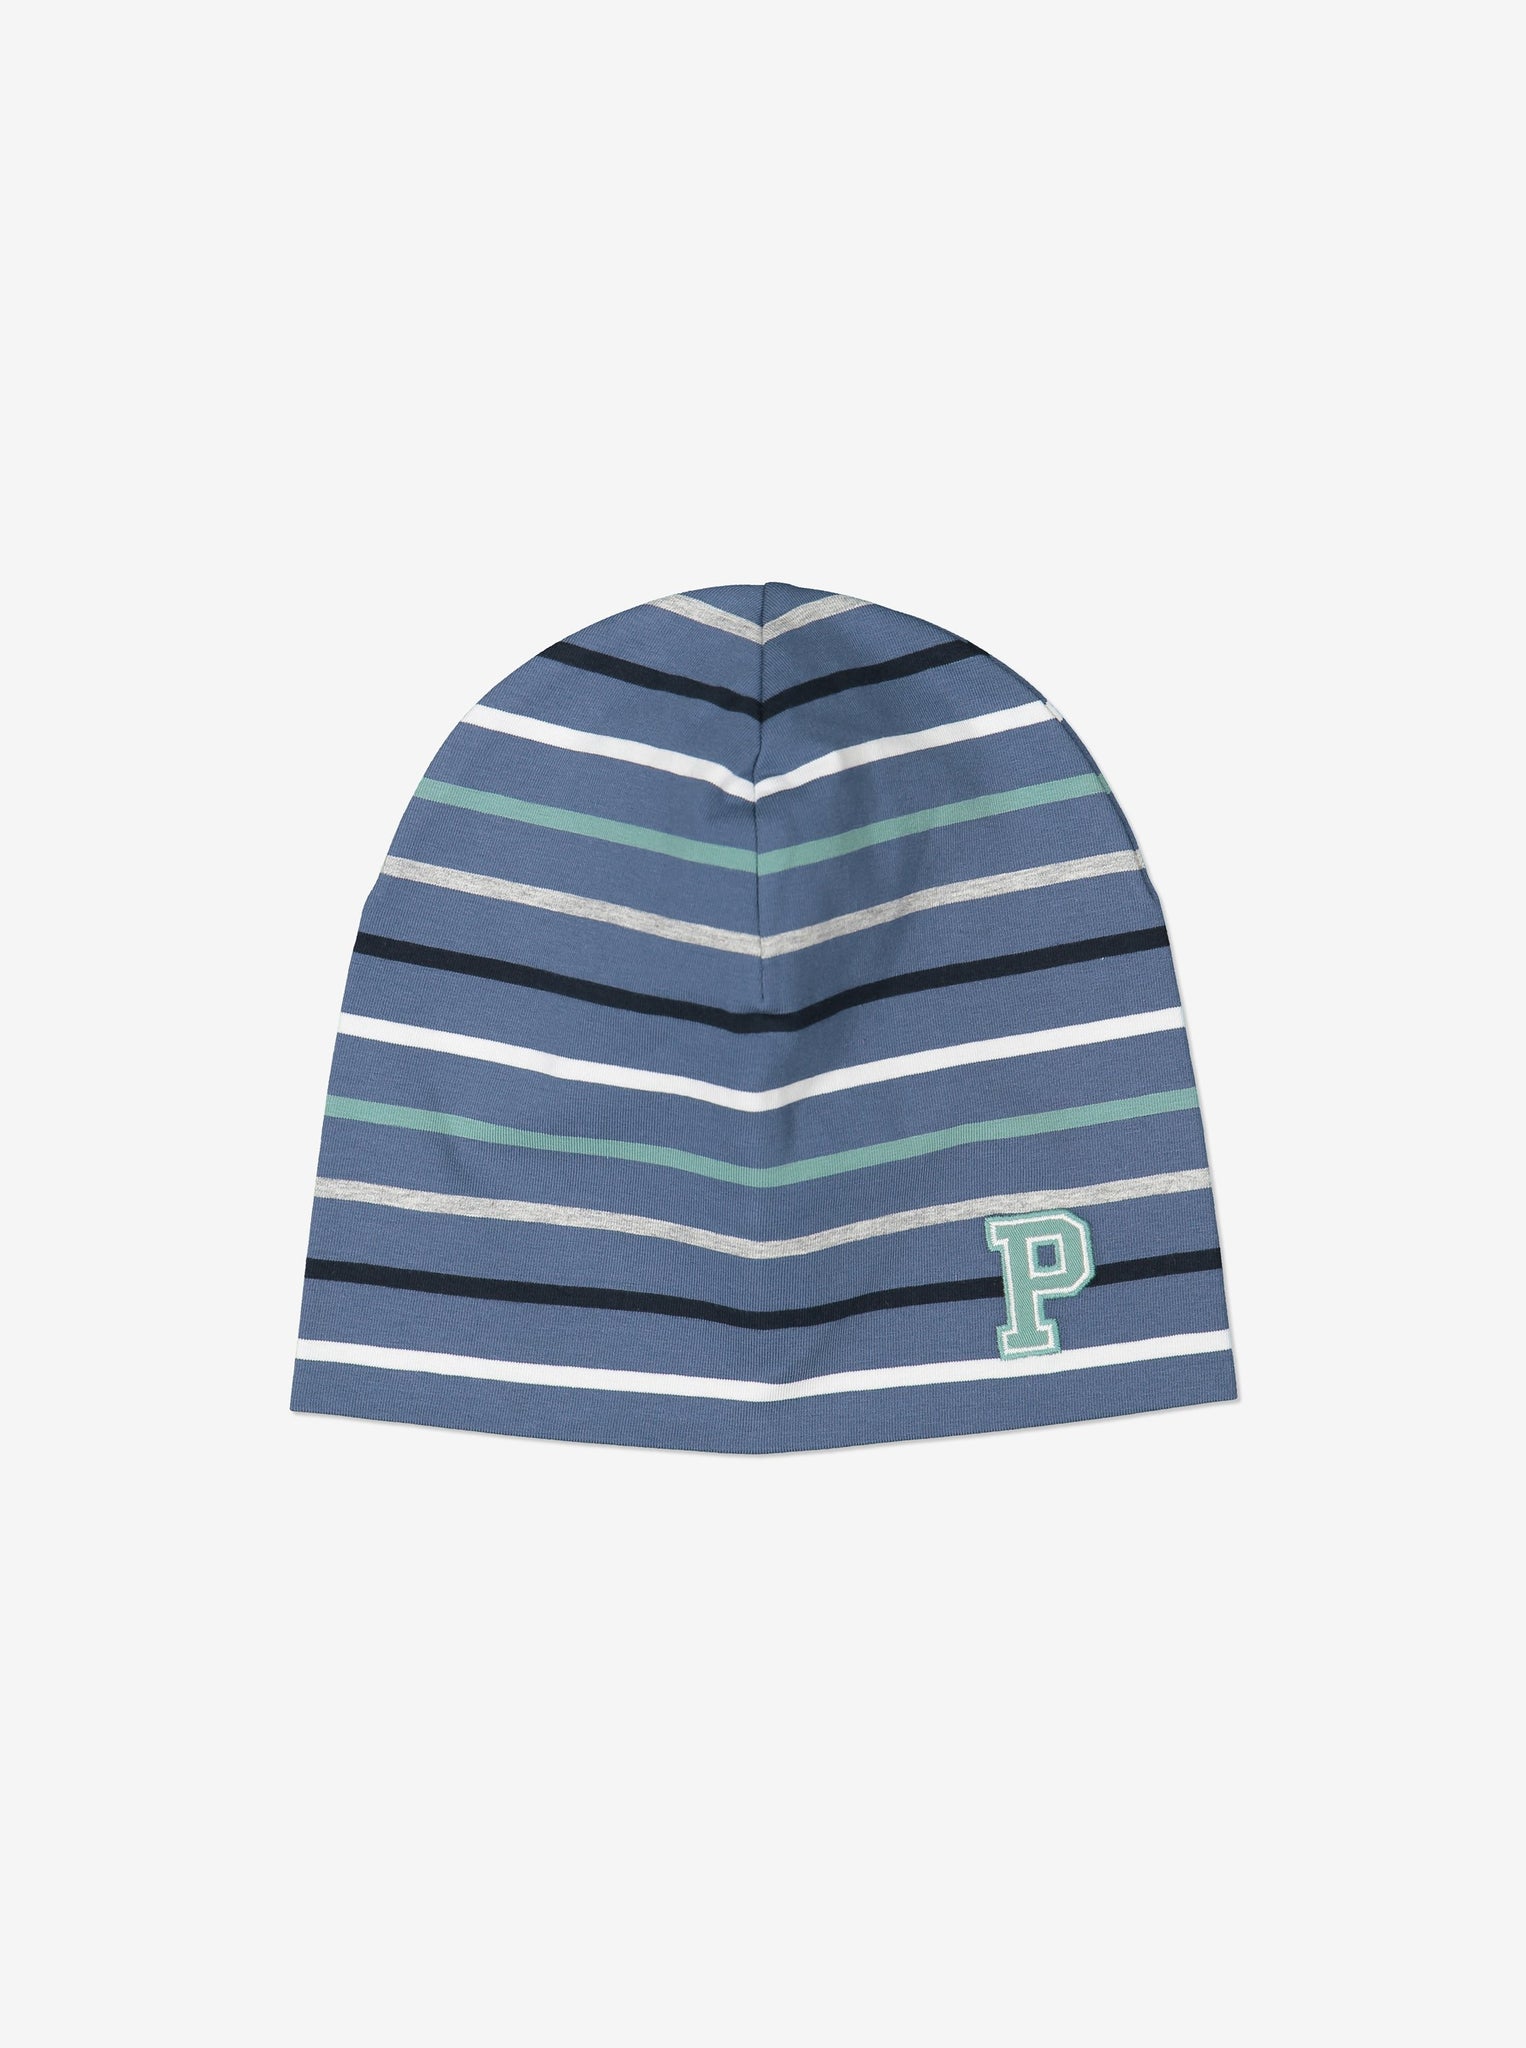 Striped Kids Blue Beanie Hat